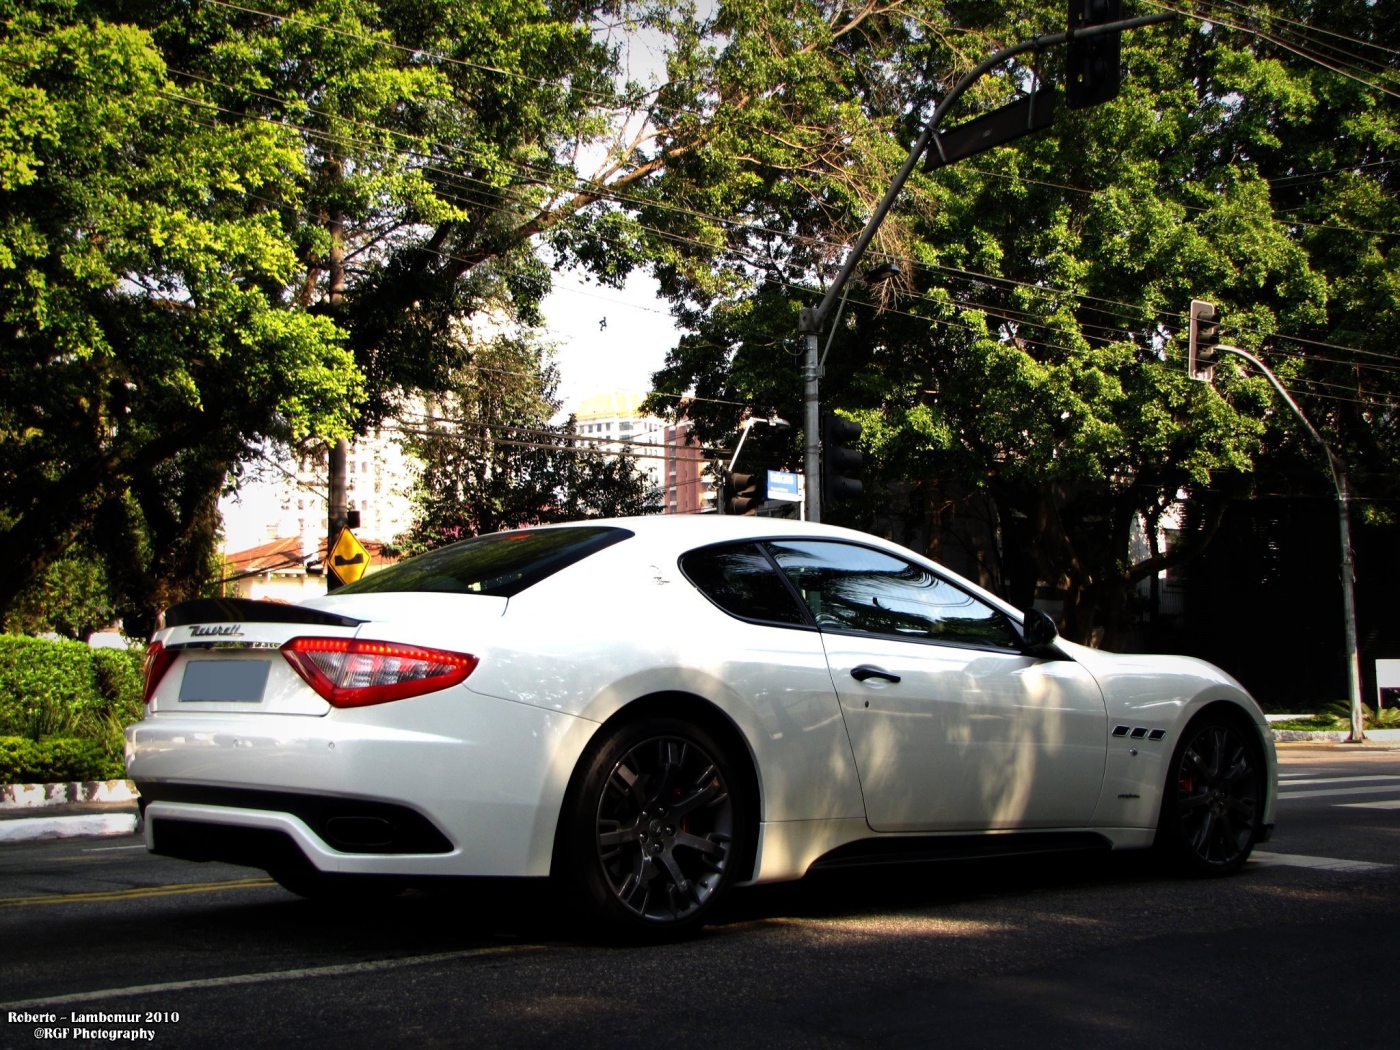 White Maserati on a city street